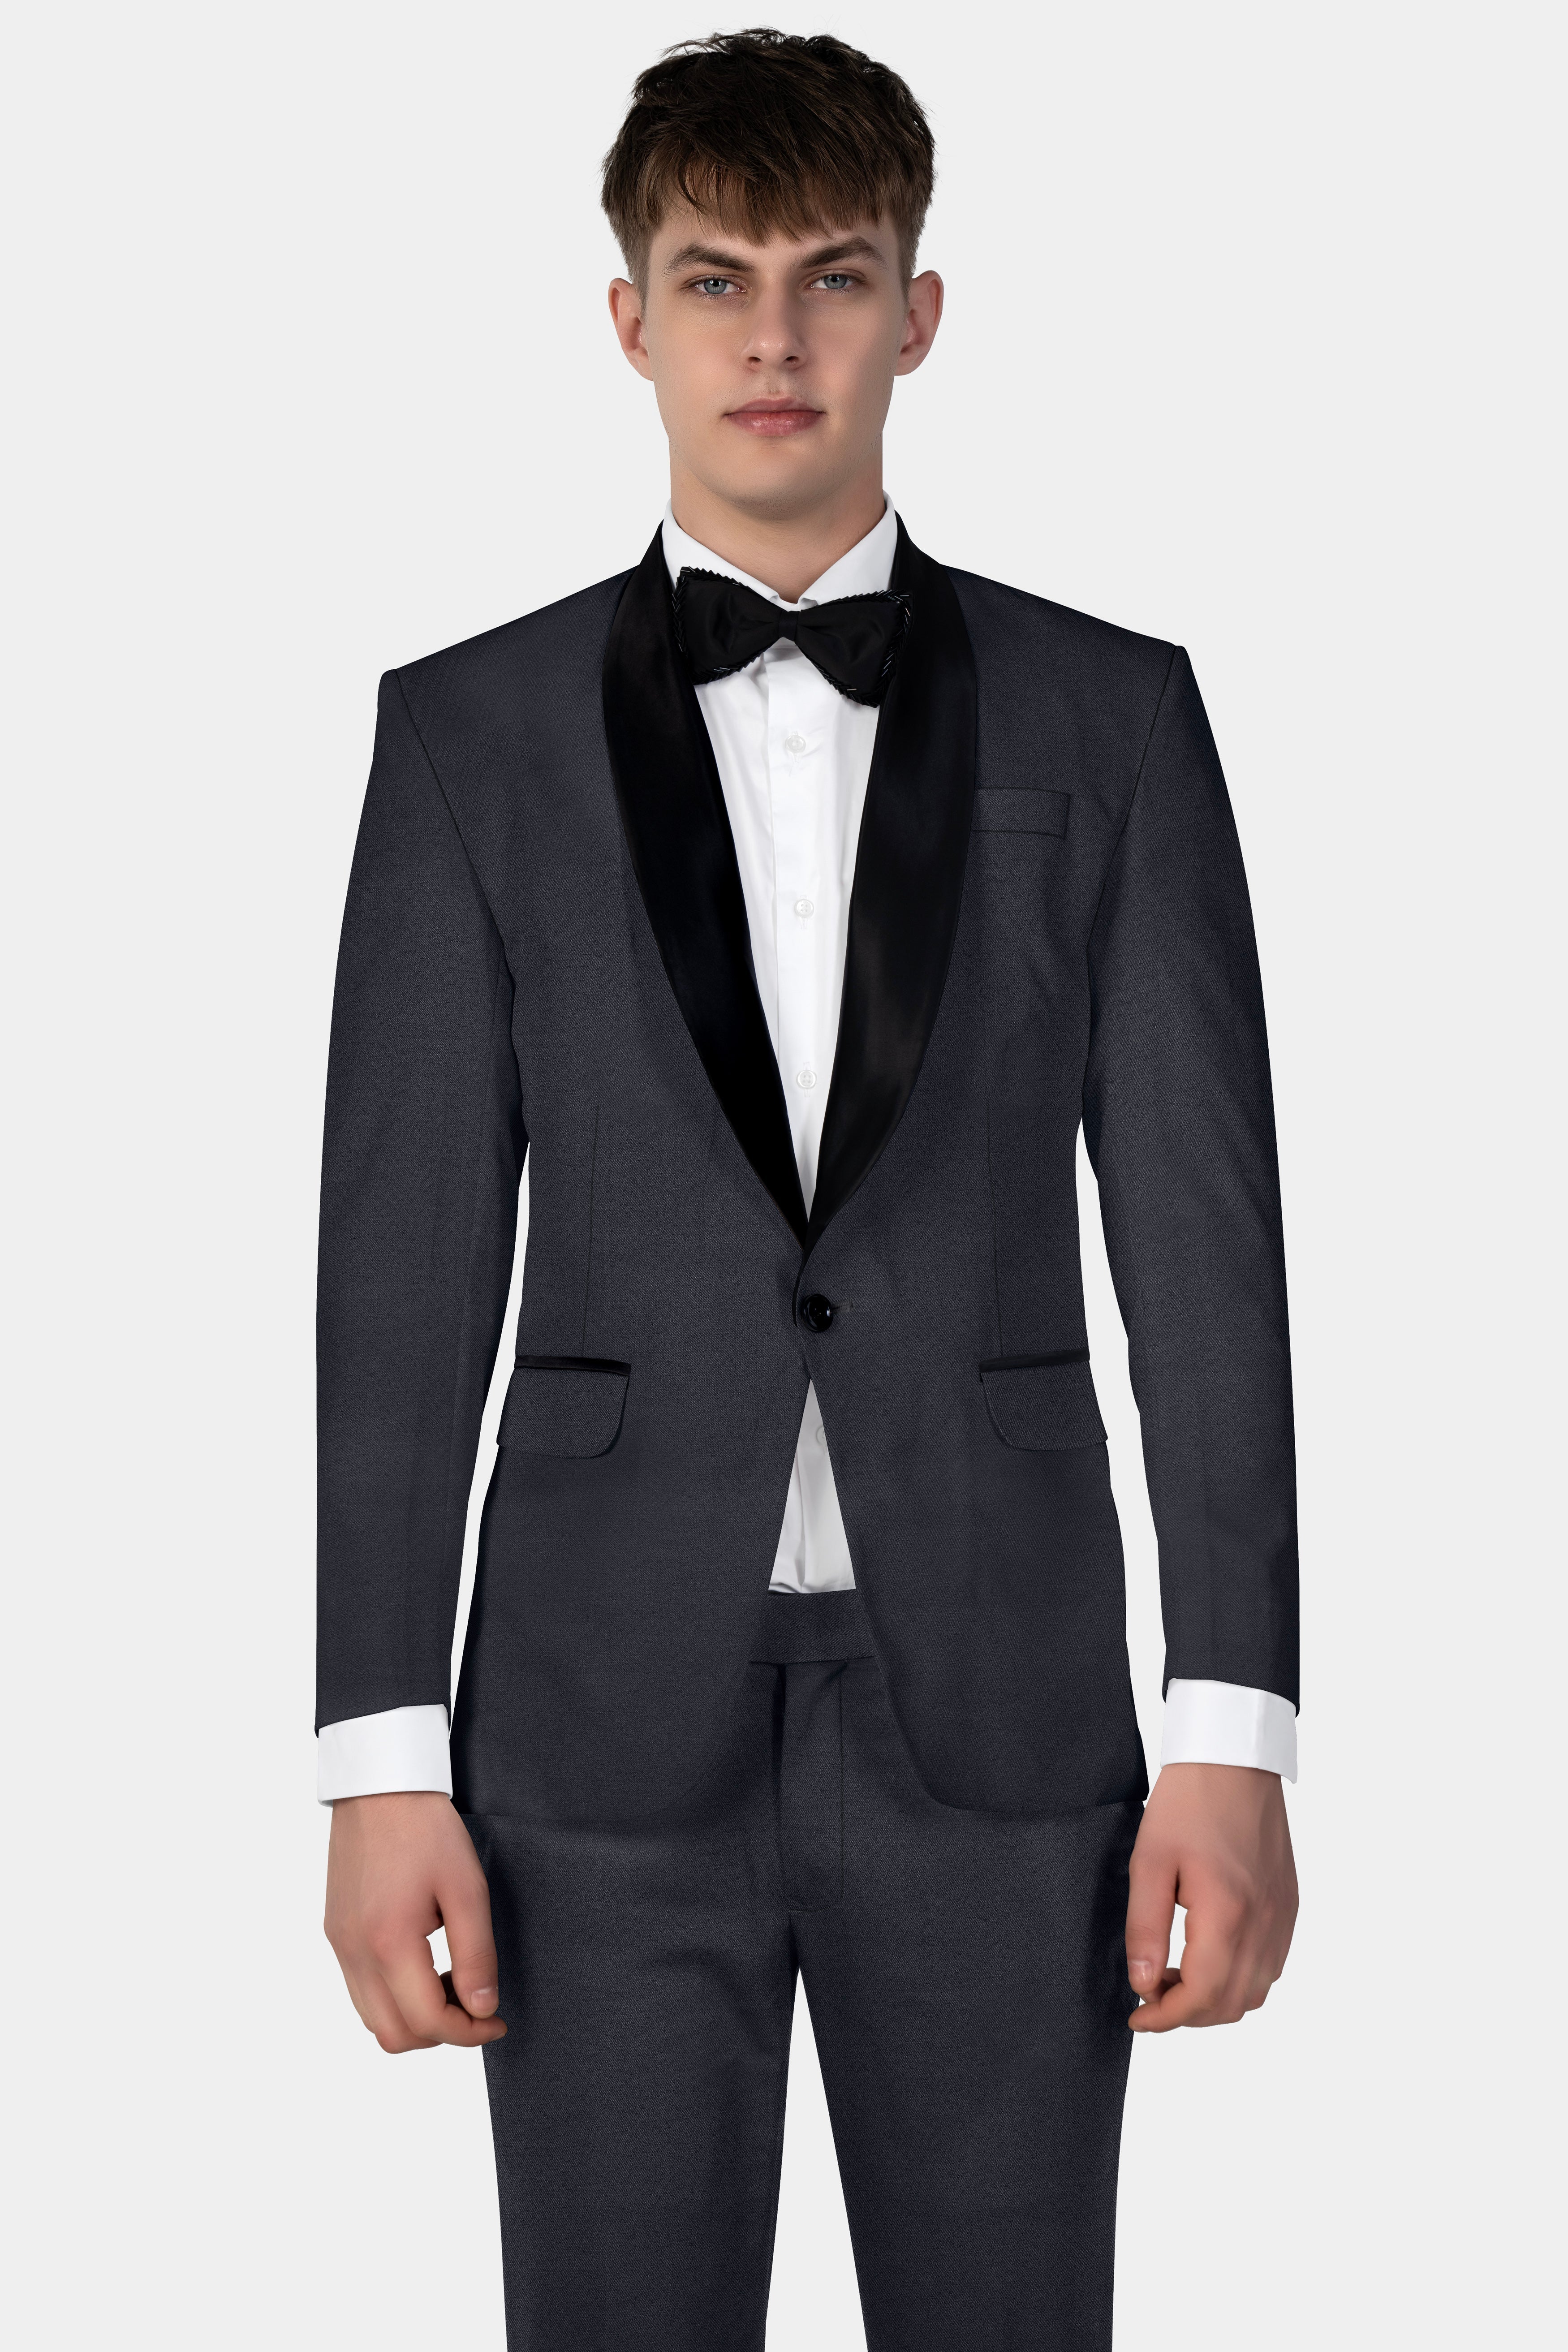 Piano Gray Wool Blend Tuxedo Suit